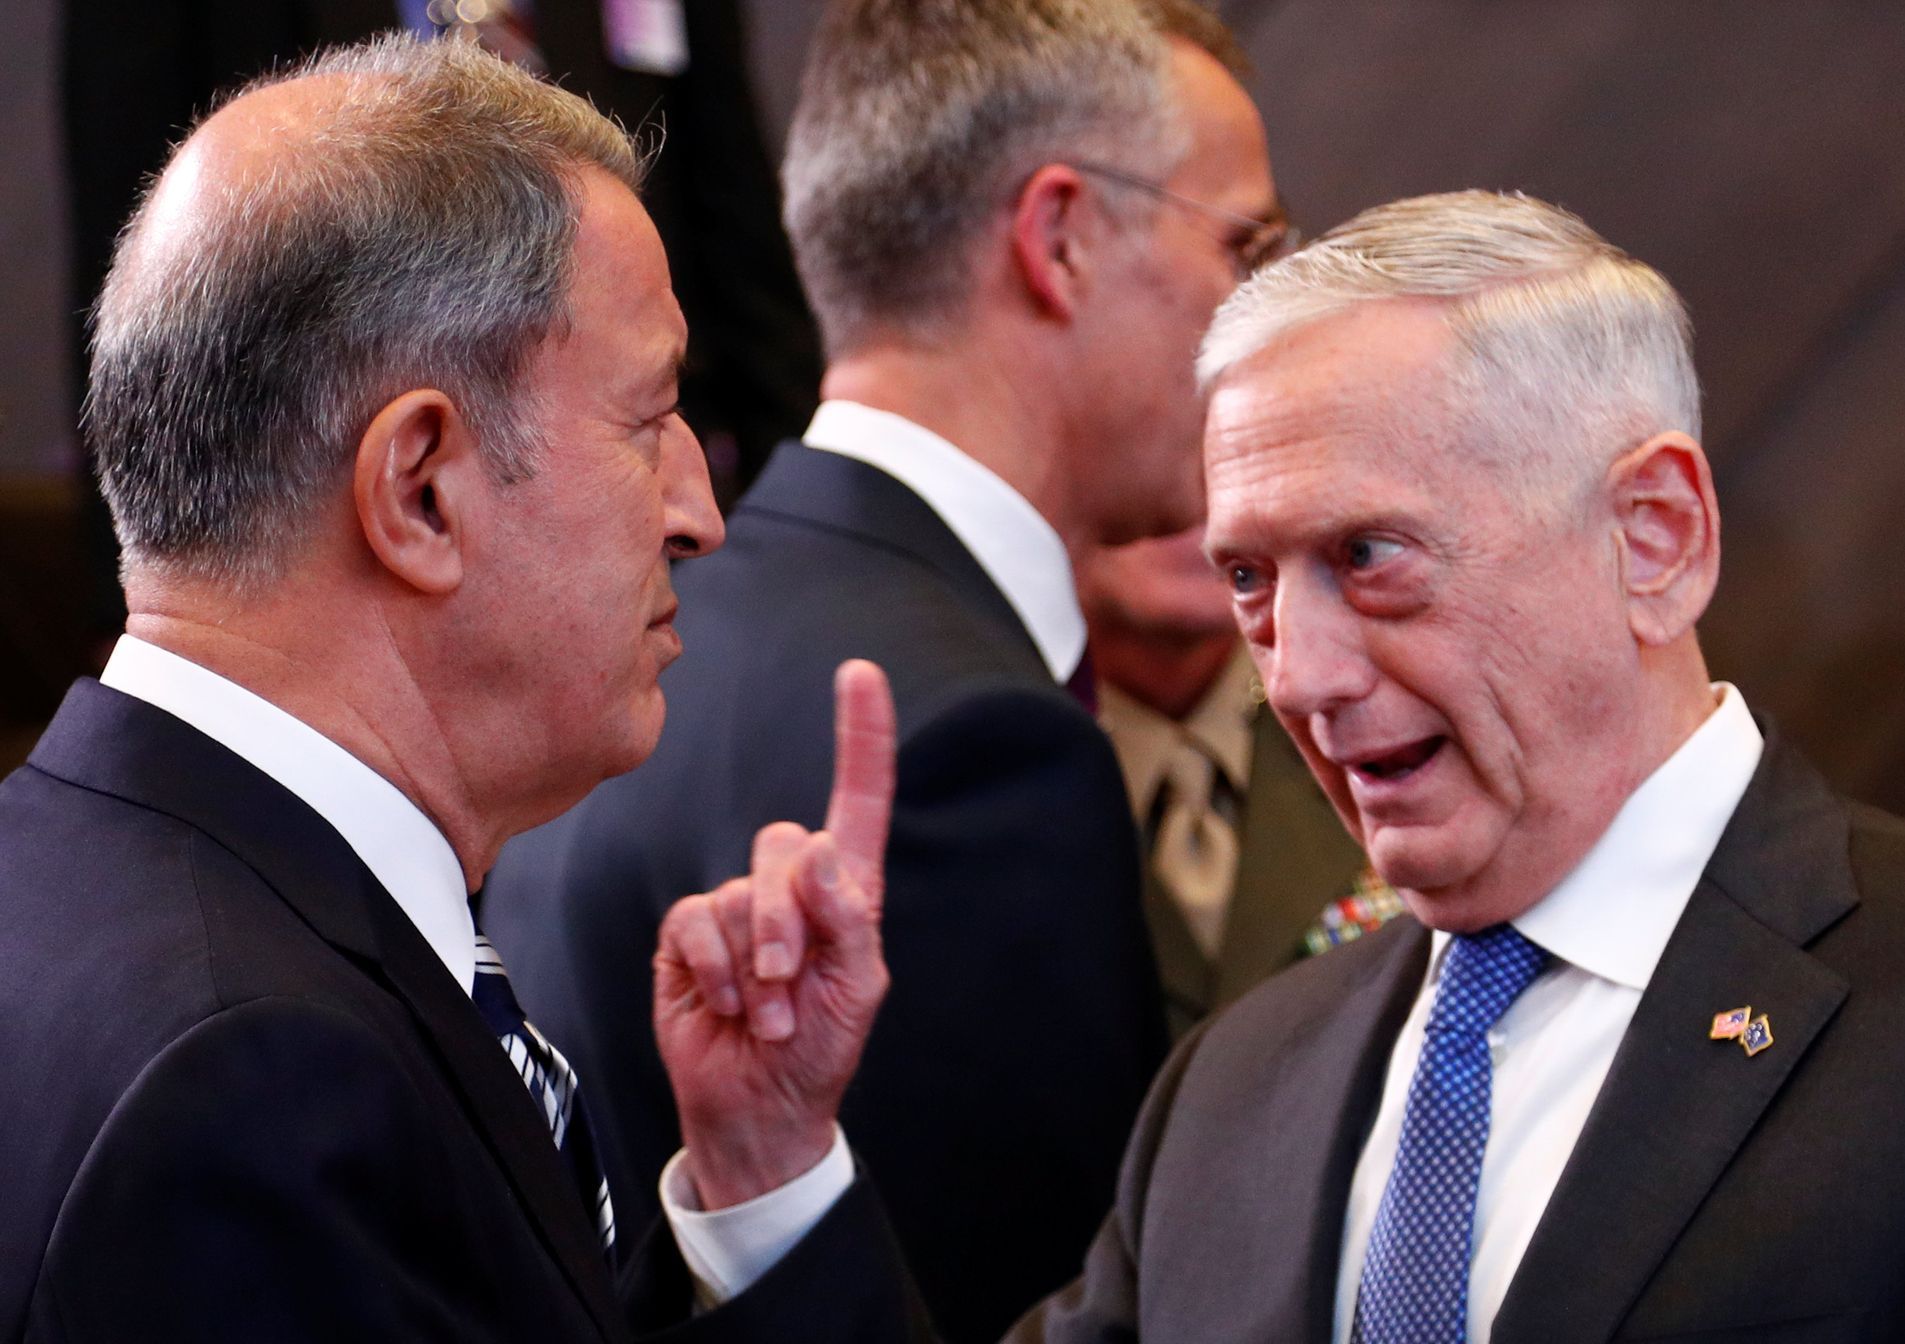 James Mattis ministr obrany USA (vpravo) s tureckým ministrem obrany v Bruselu